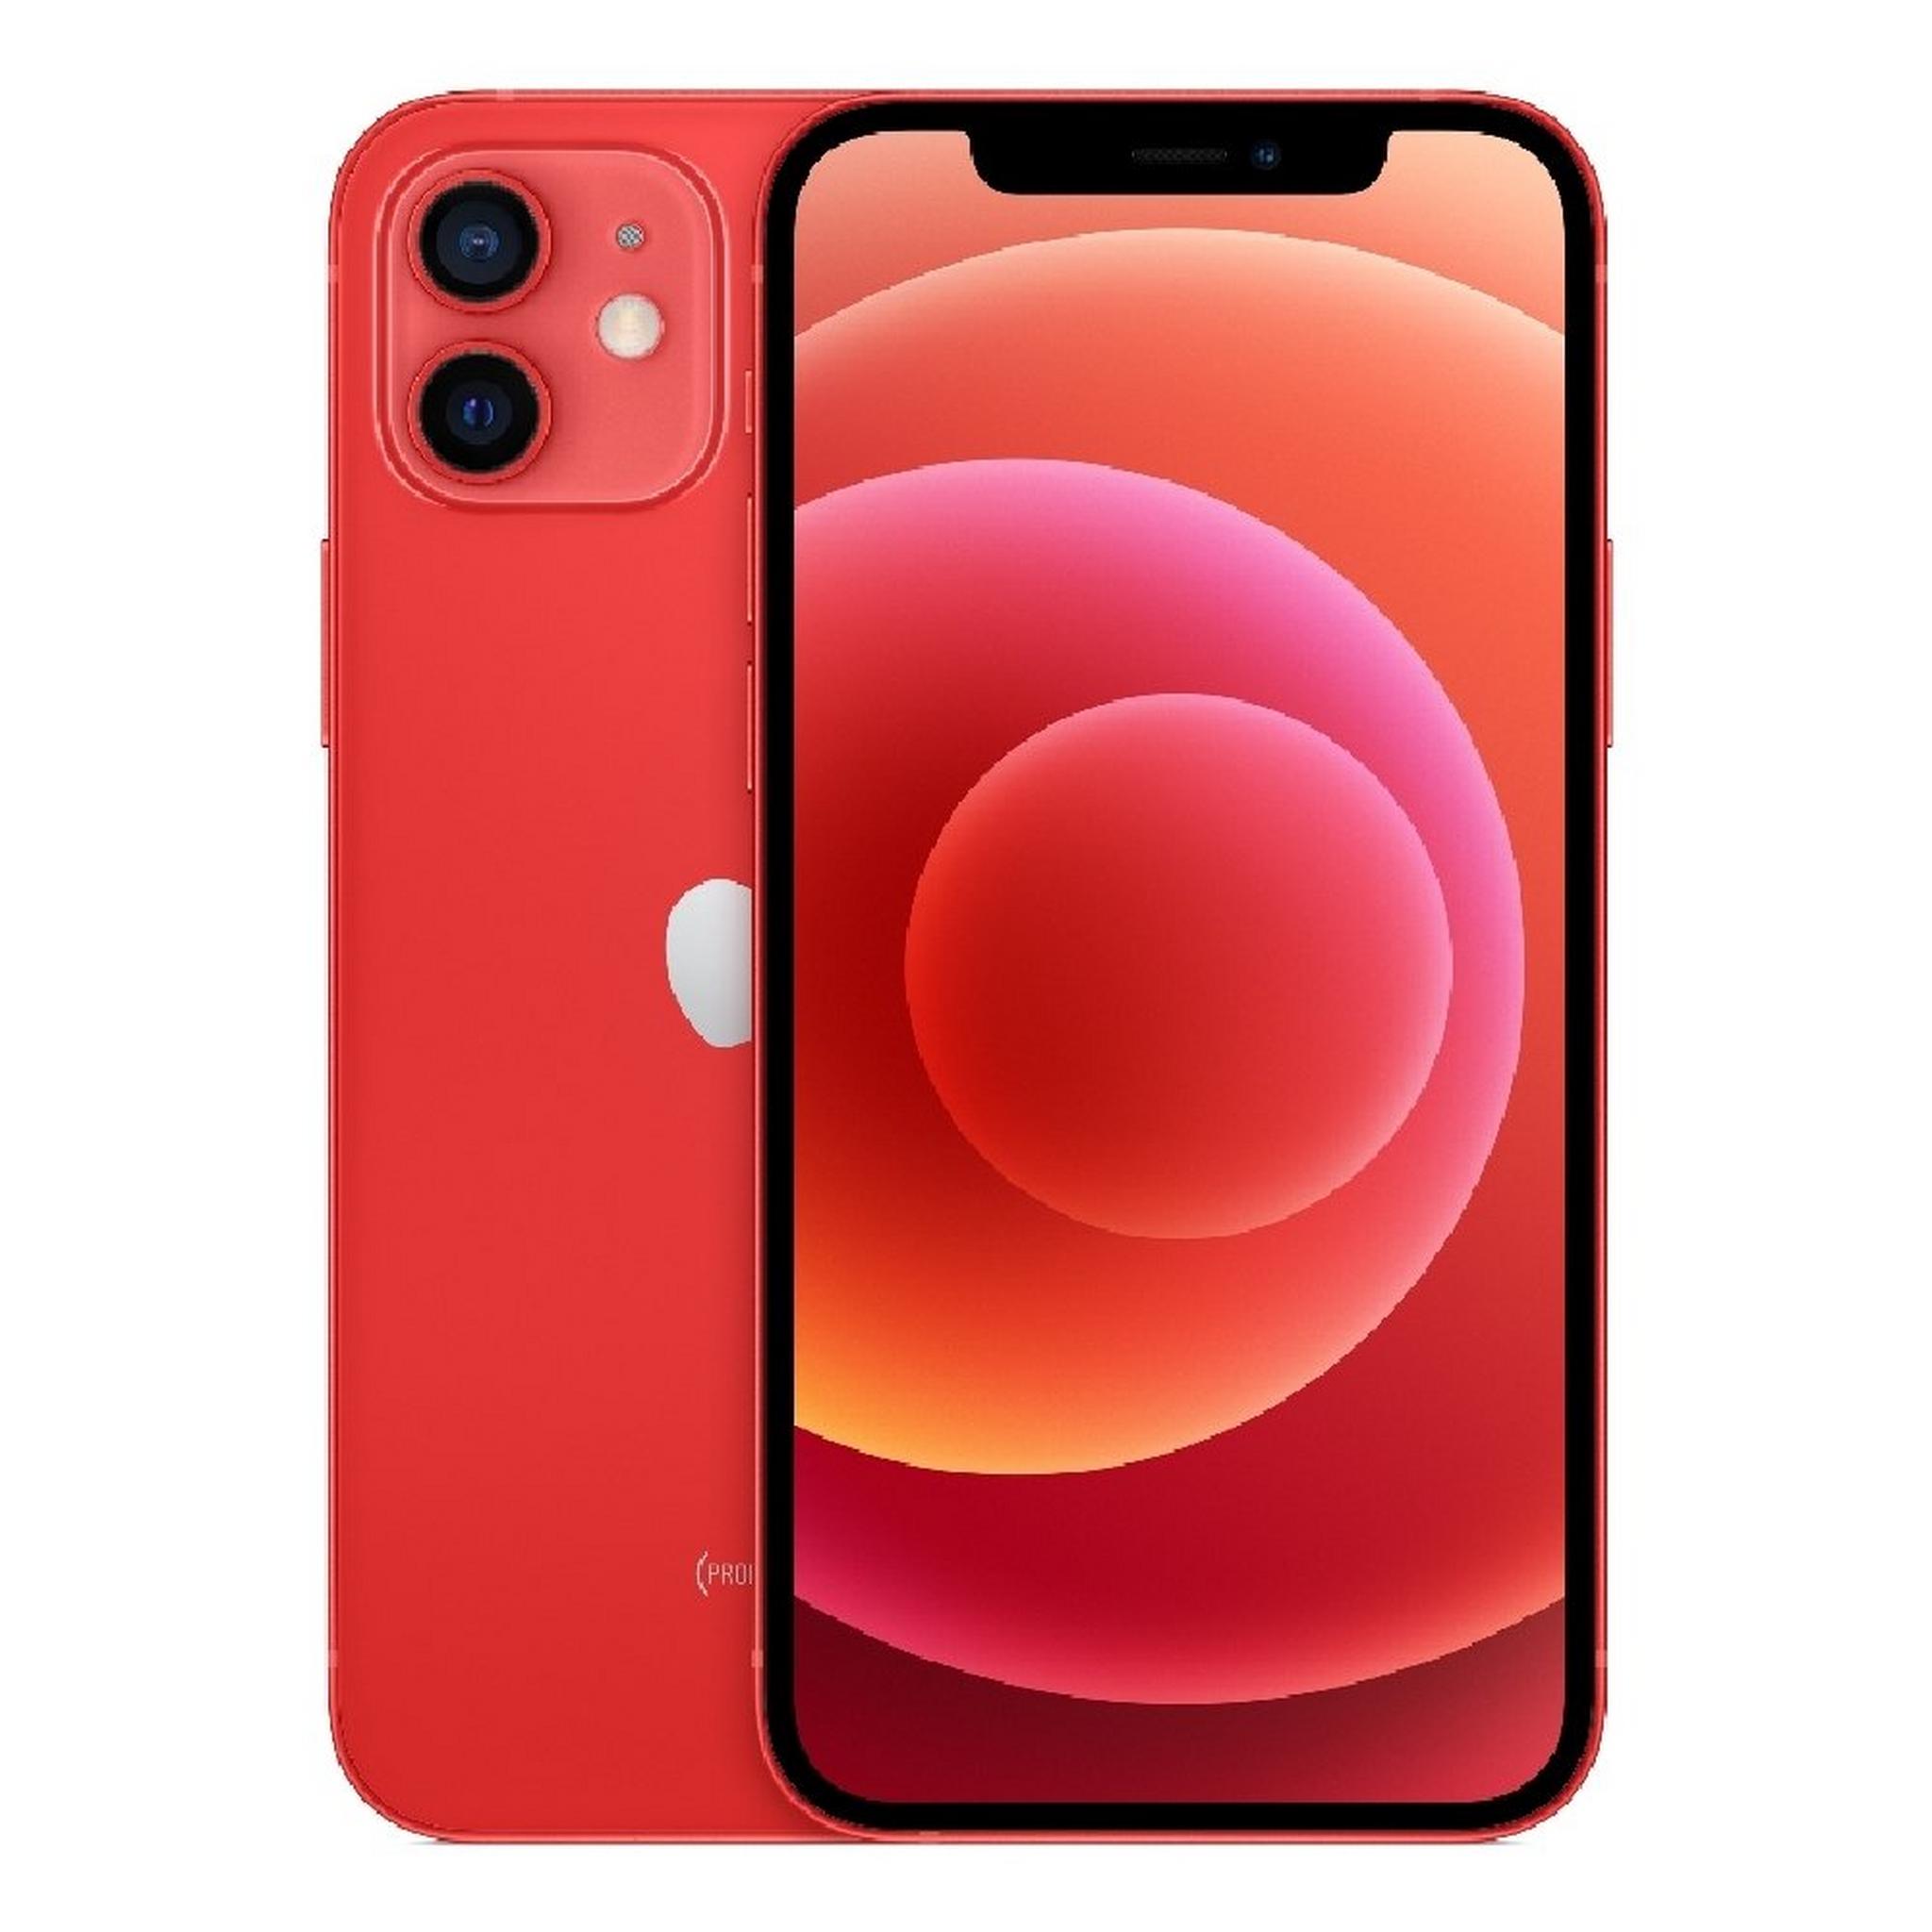 Apple iPhone 12 64GB - Red